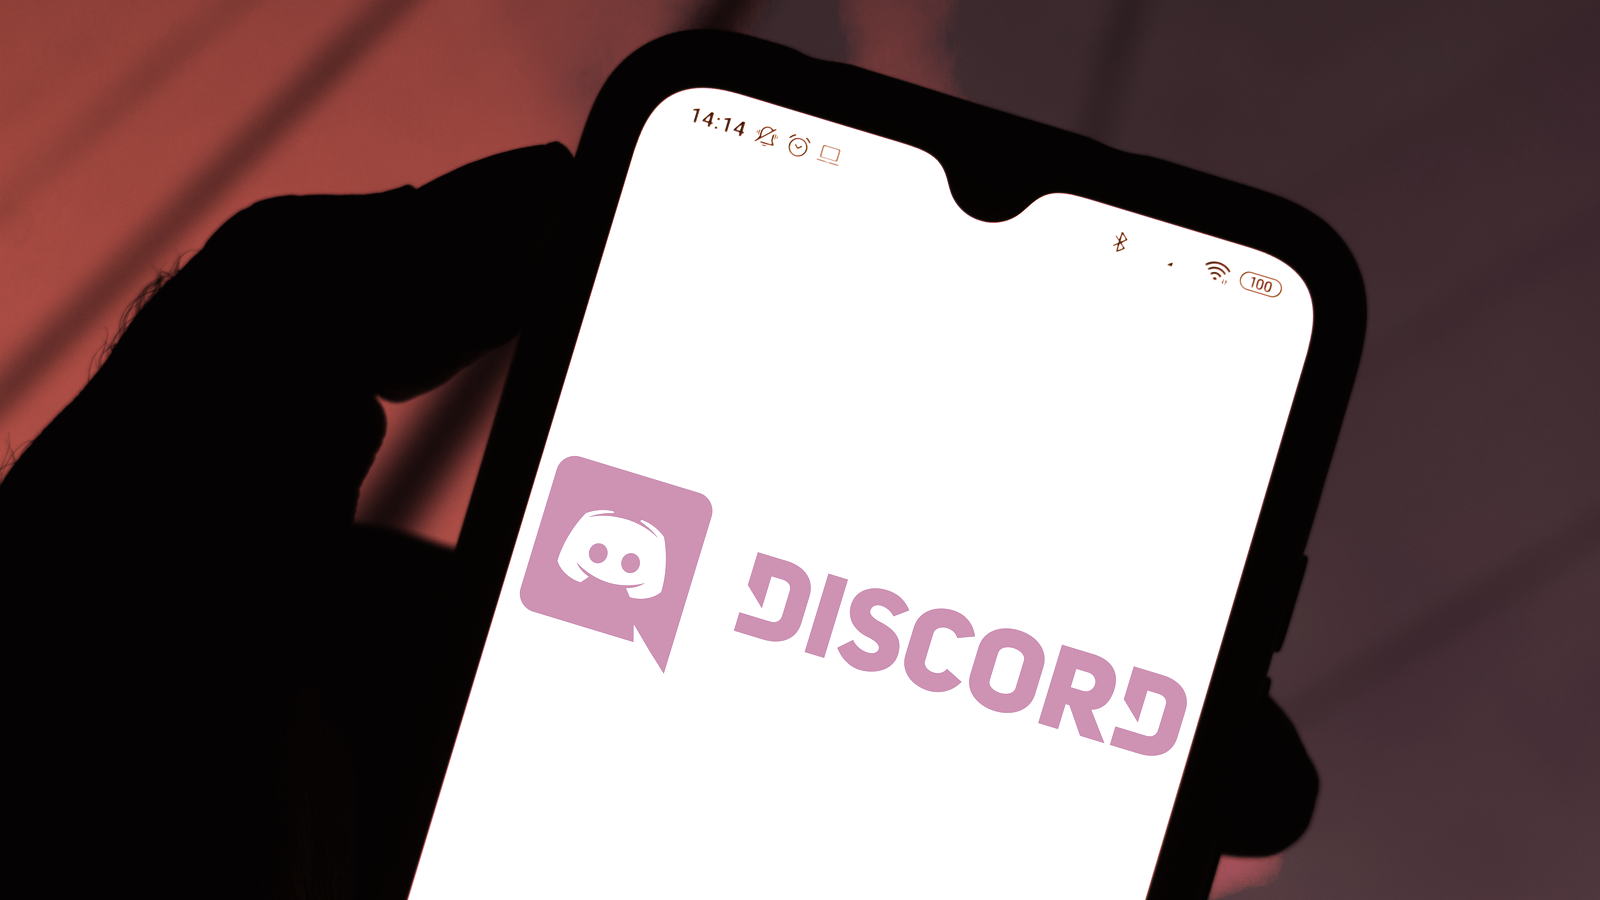 Discord is a popular messaging platform similar to Slack. Image: Shutterstock